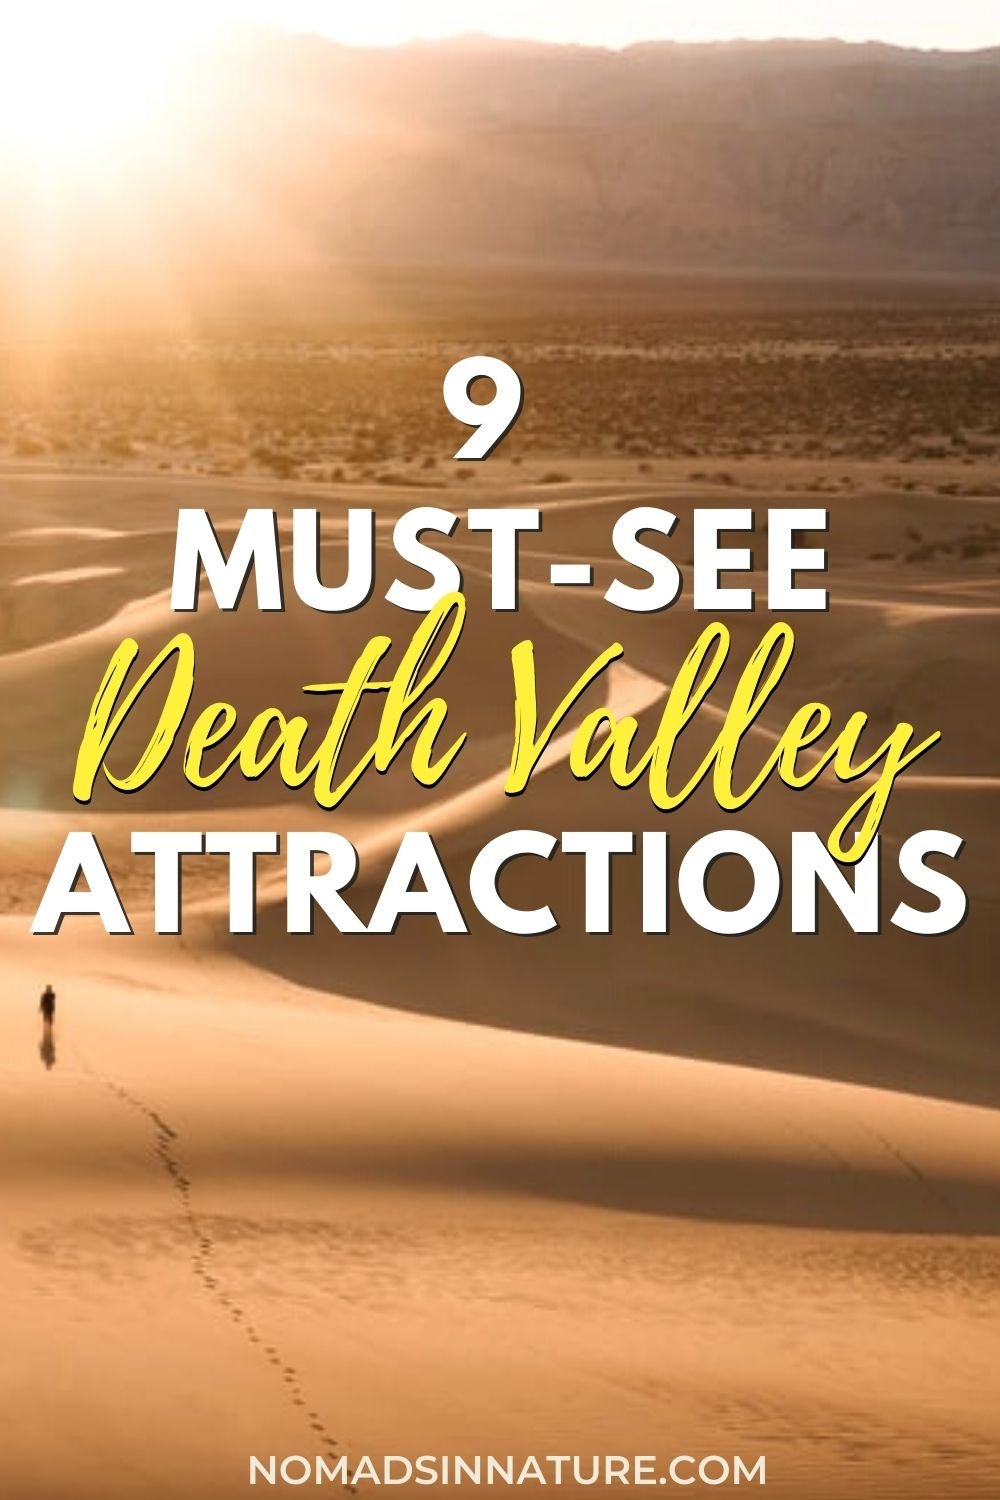 Death Valley Attractions.jpg